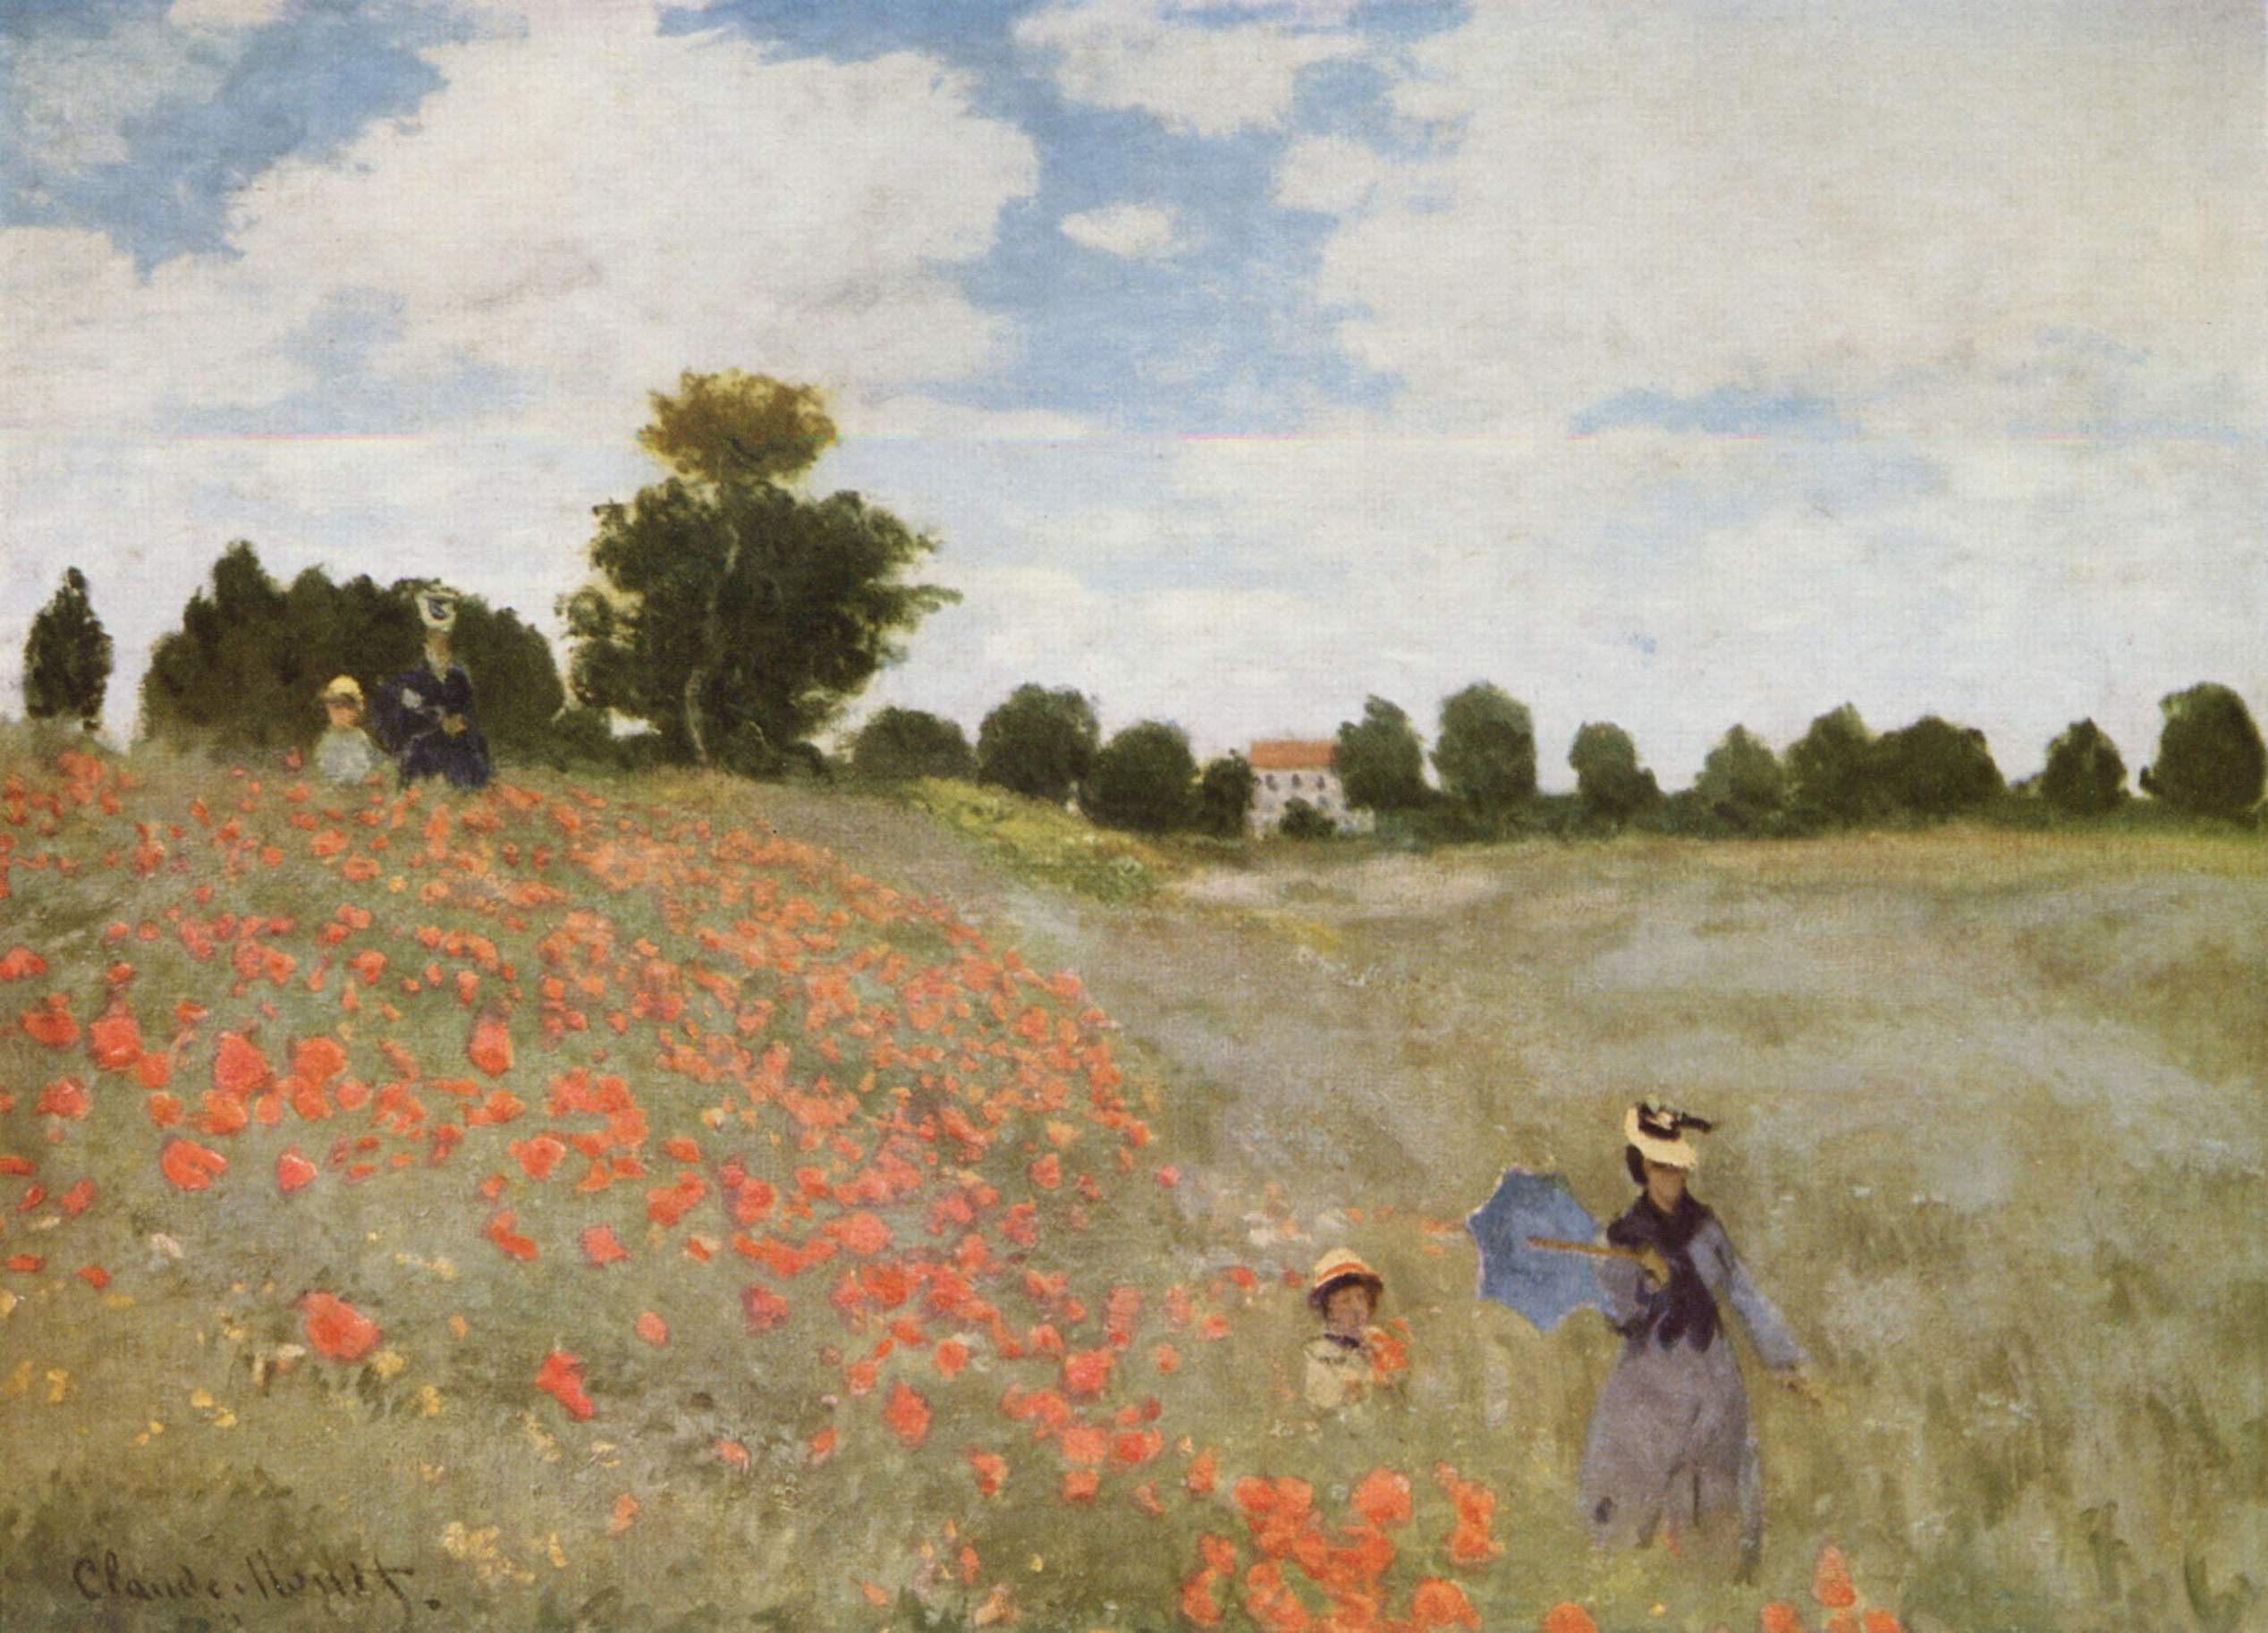 “I papaveri”, di Claude Monet